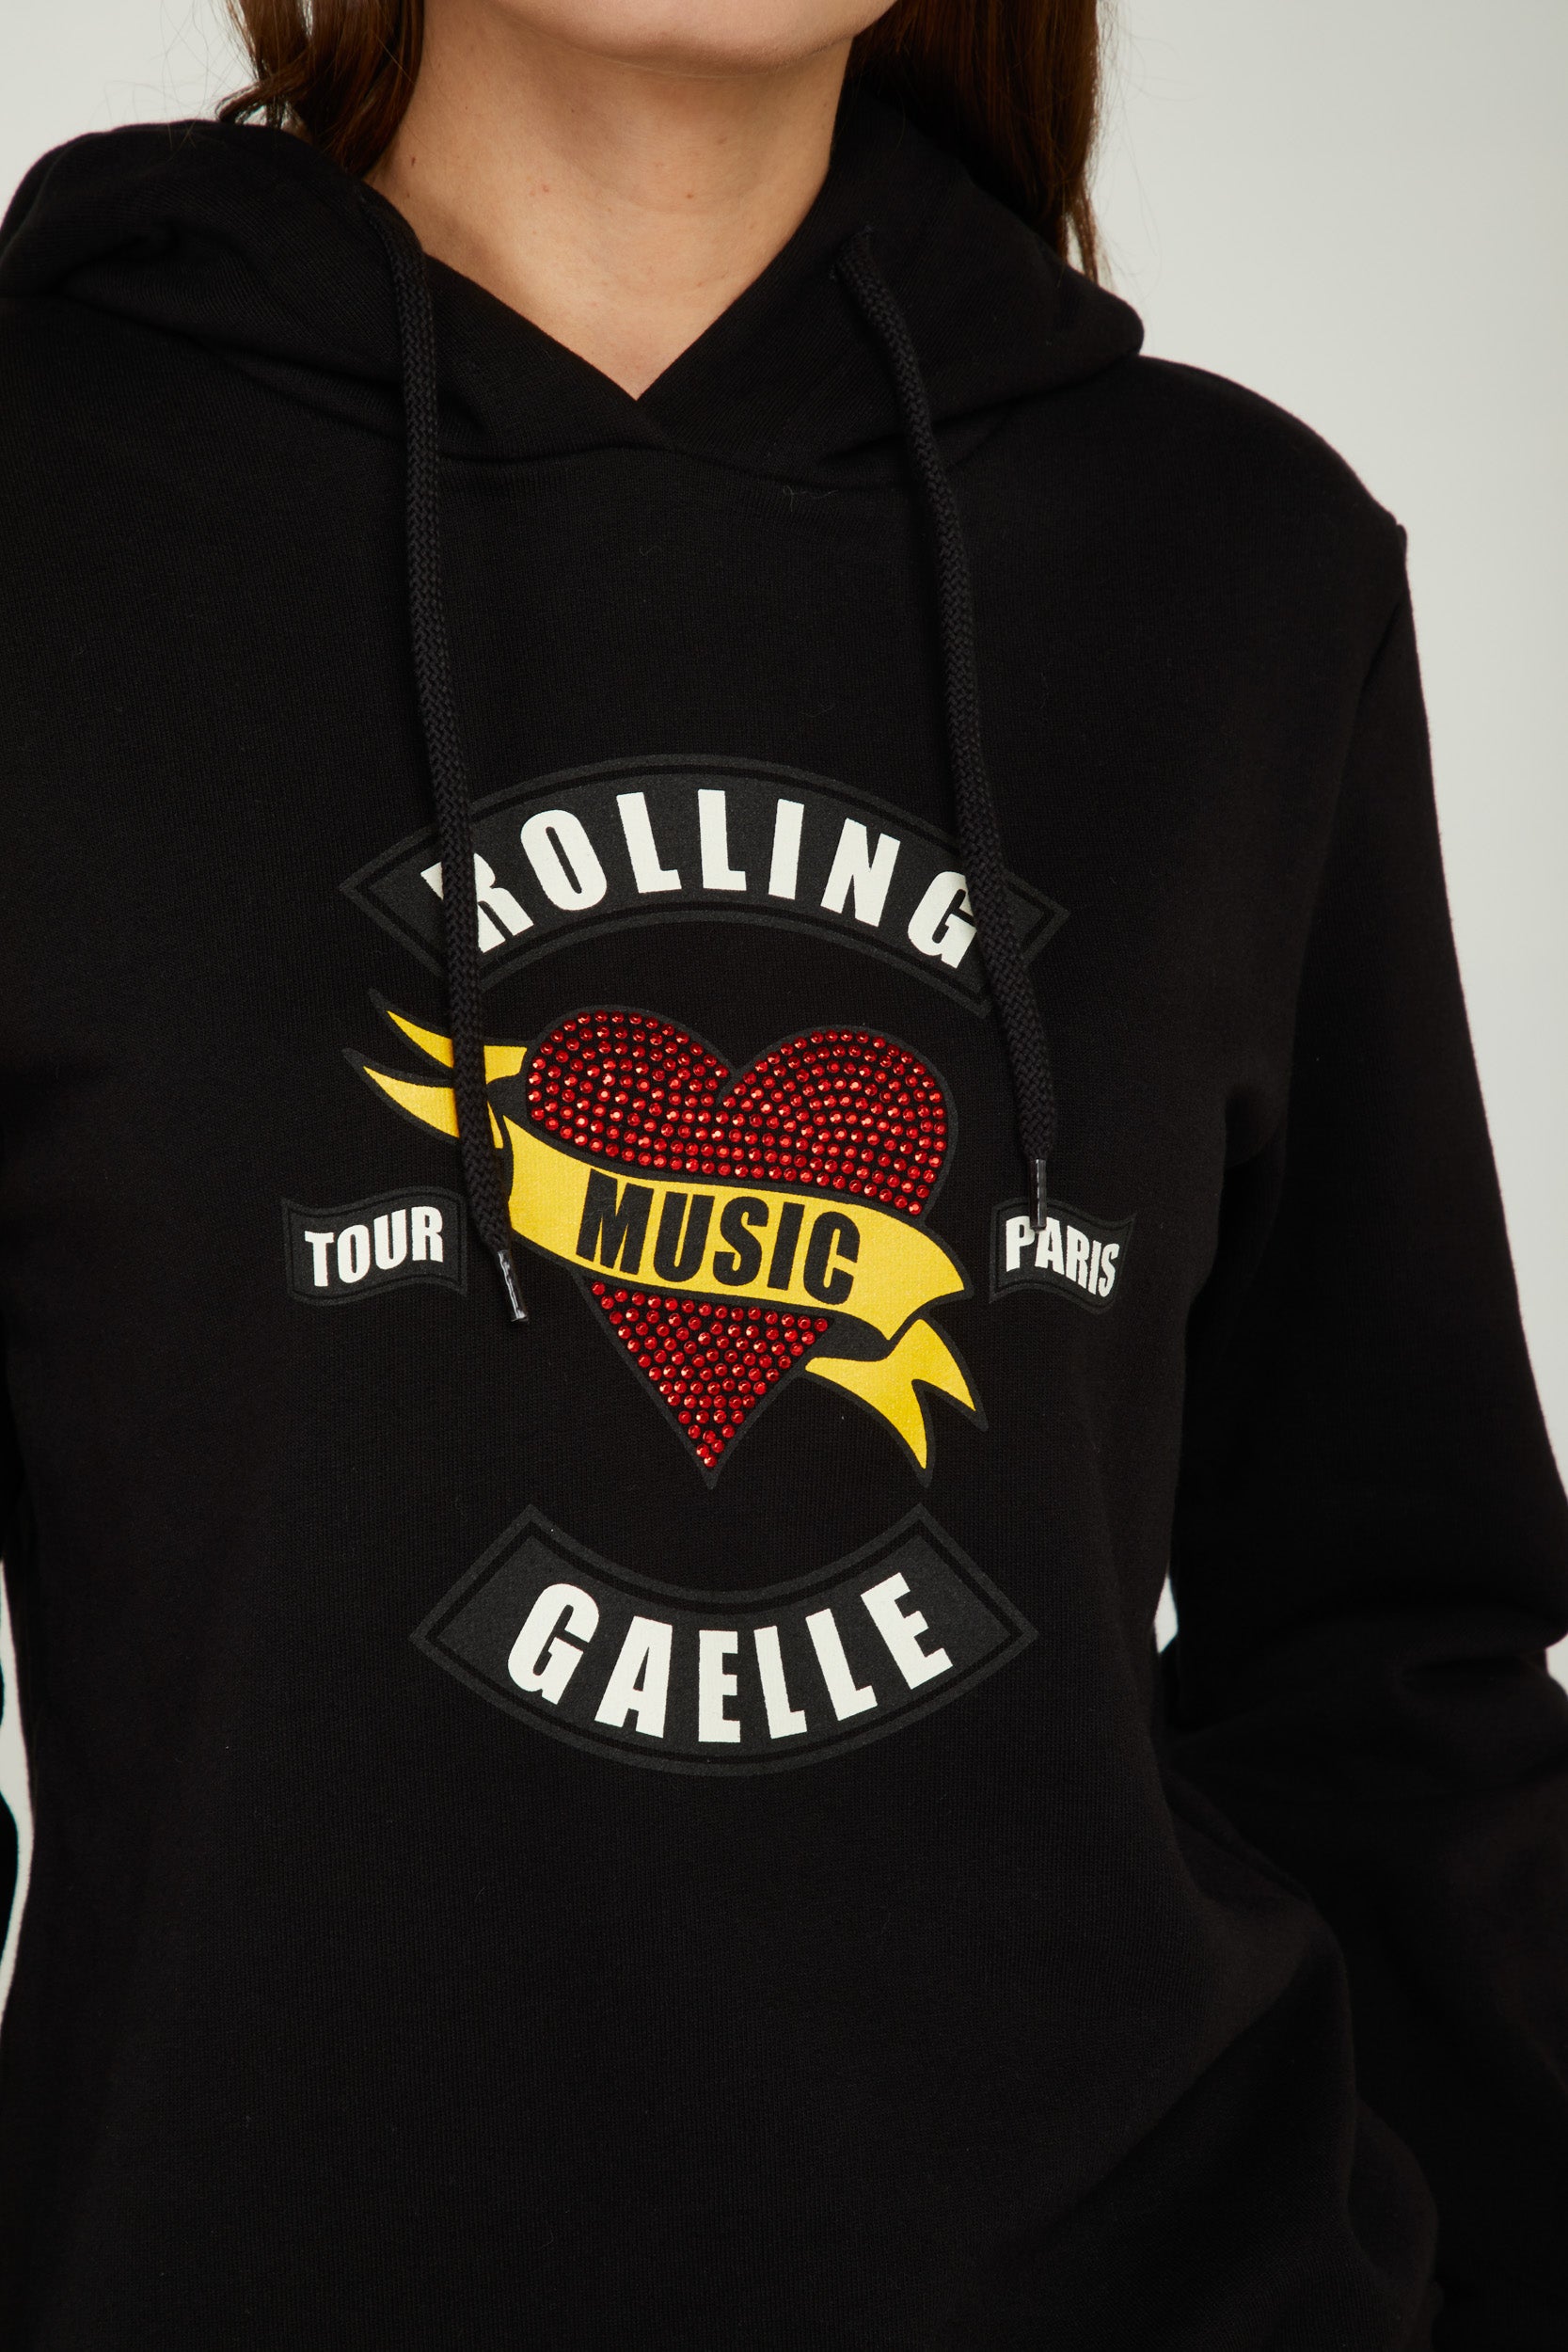 GAELLE Black Hooded Sweatshirt